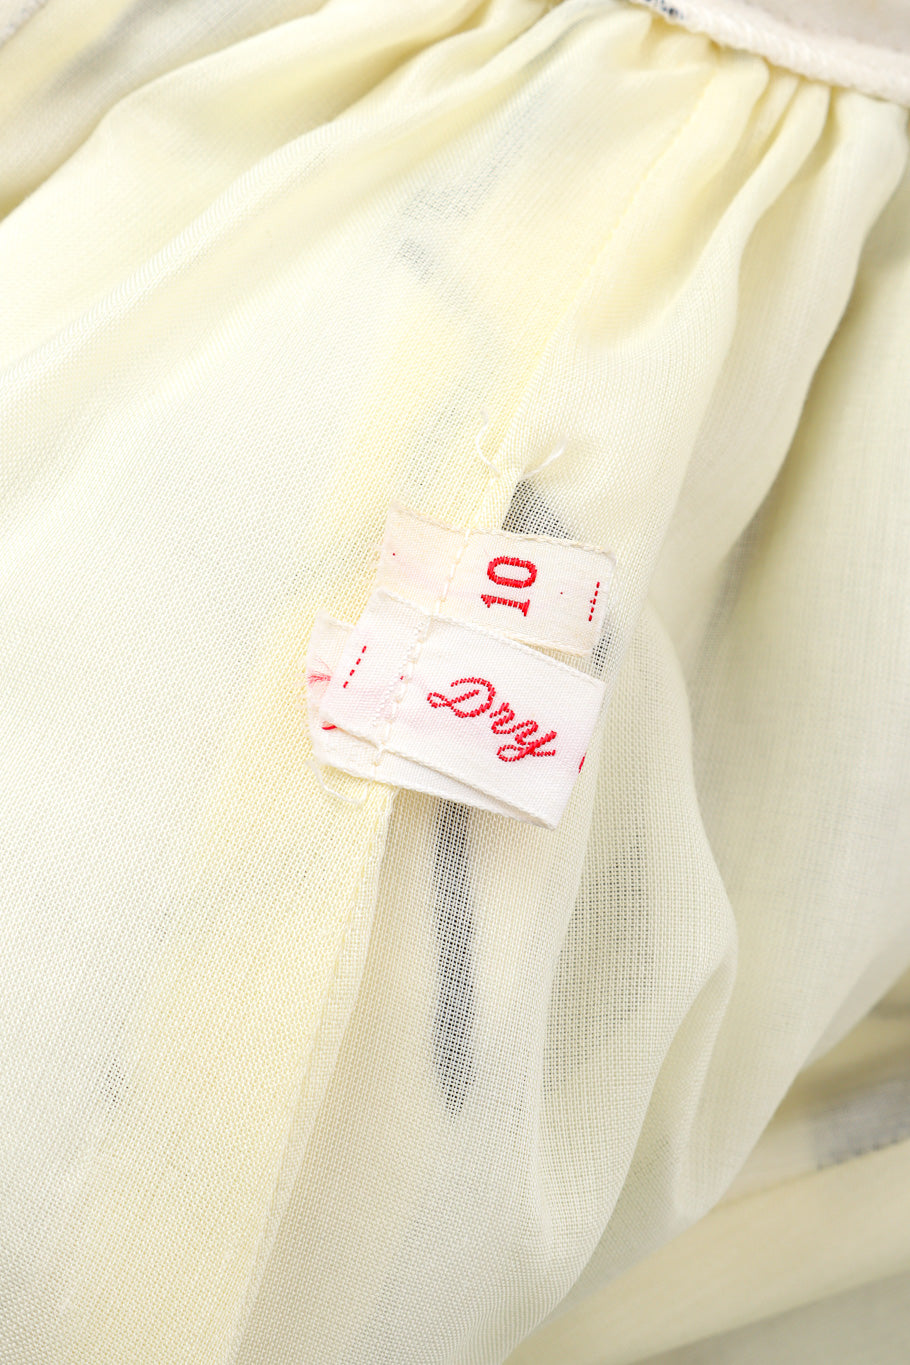 Velvet Floral Ball Skirt by Saks Fifth Avenue size tag @recessla